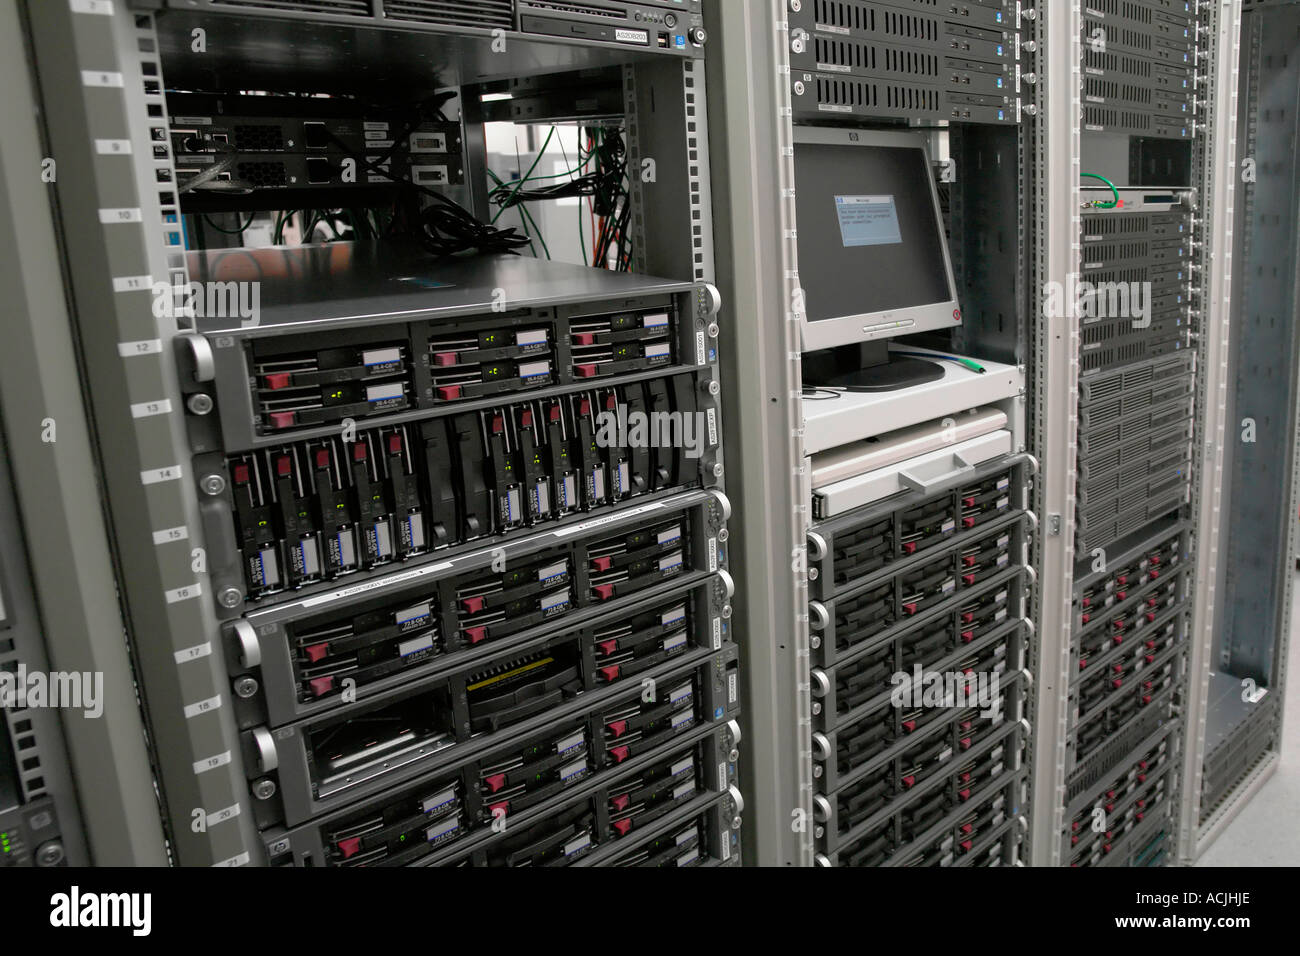 HP Proliant rack mounted servers Stock Photo - Alamy